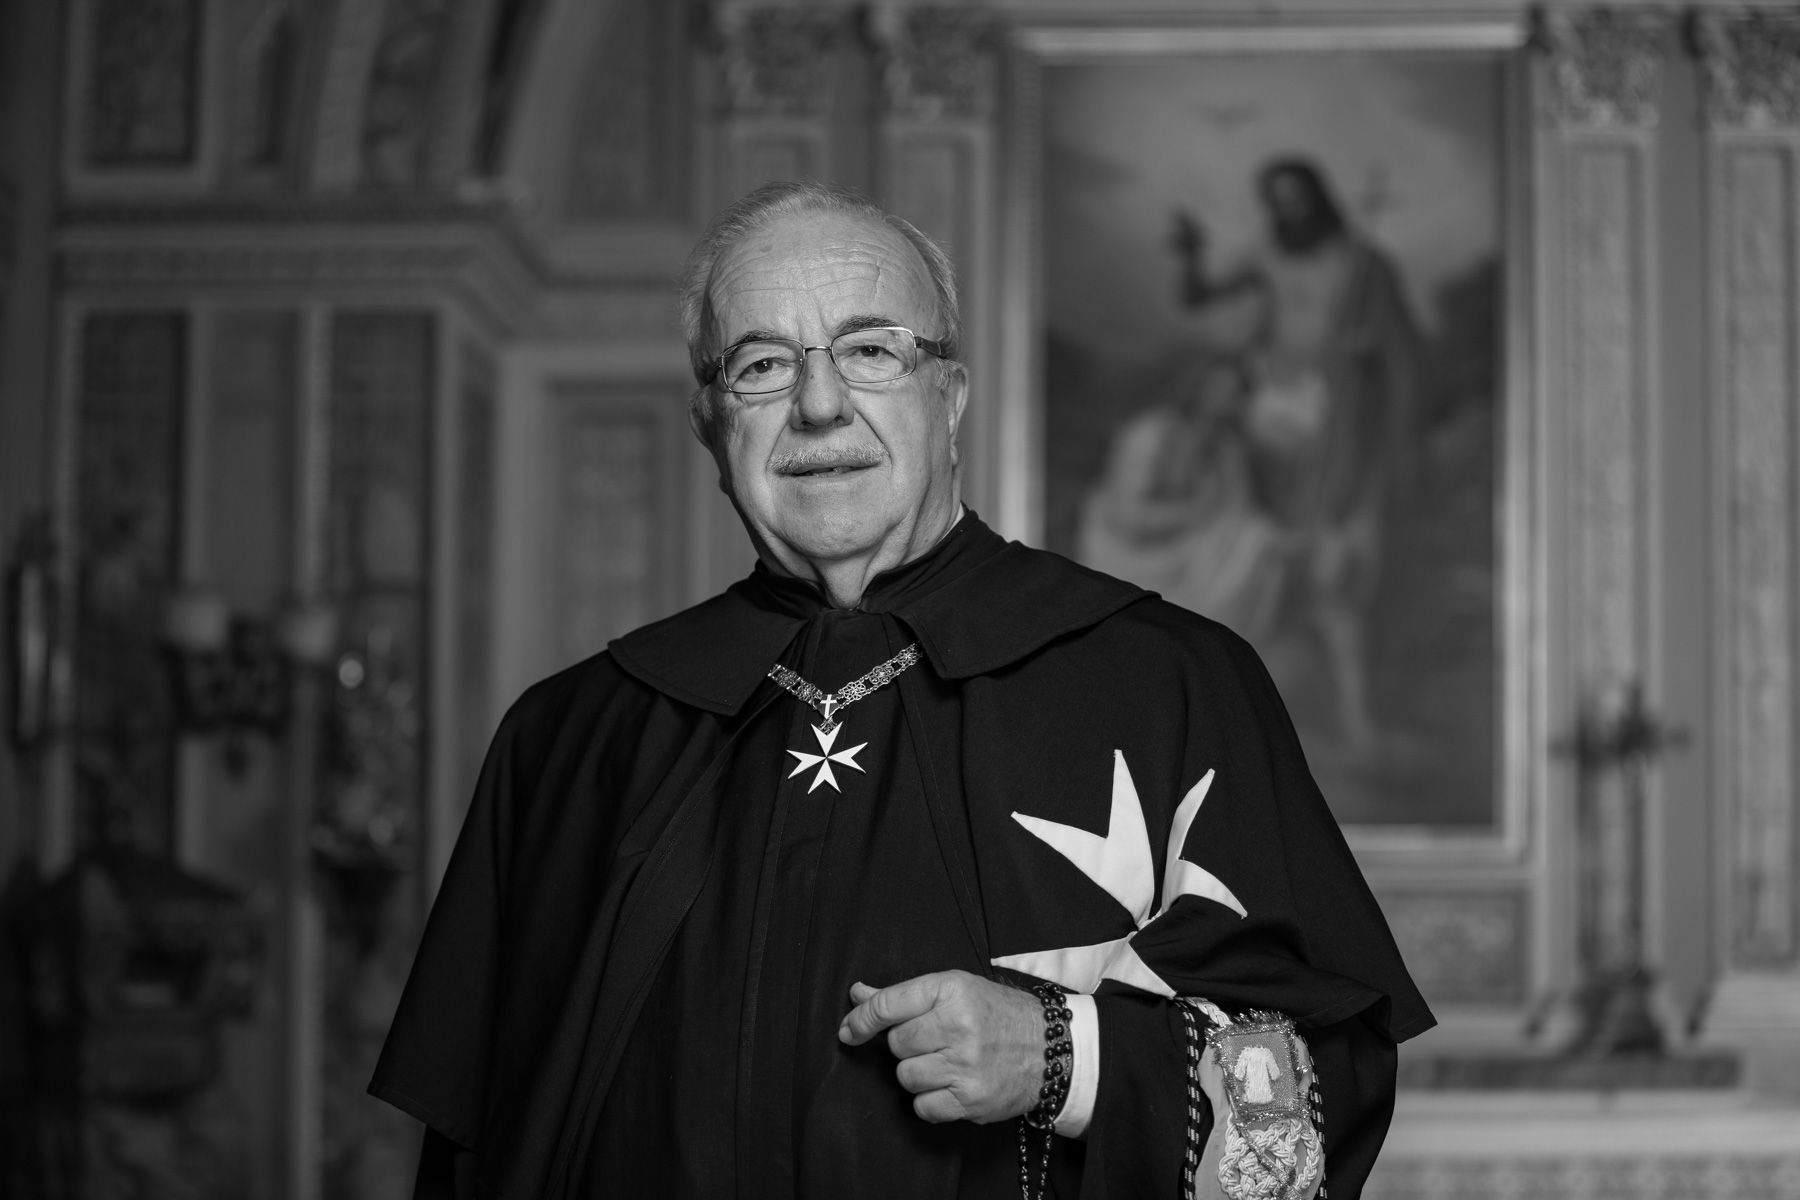 Grand Magistry announces death of H.E. the Lieutenant of the Grand Master Fra’ Marco Luzzago